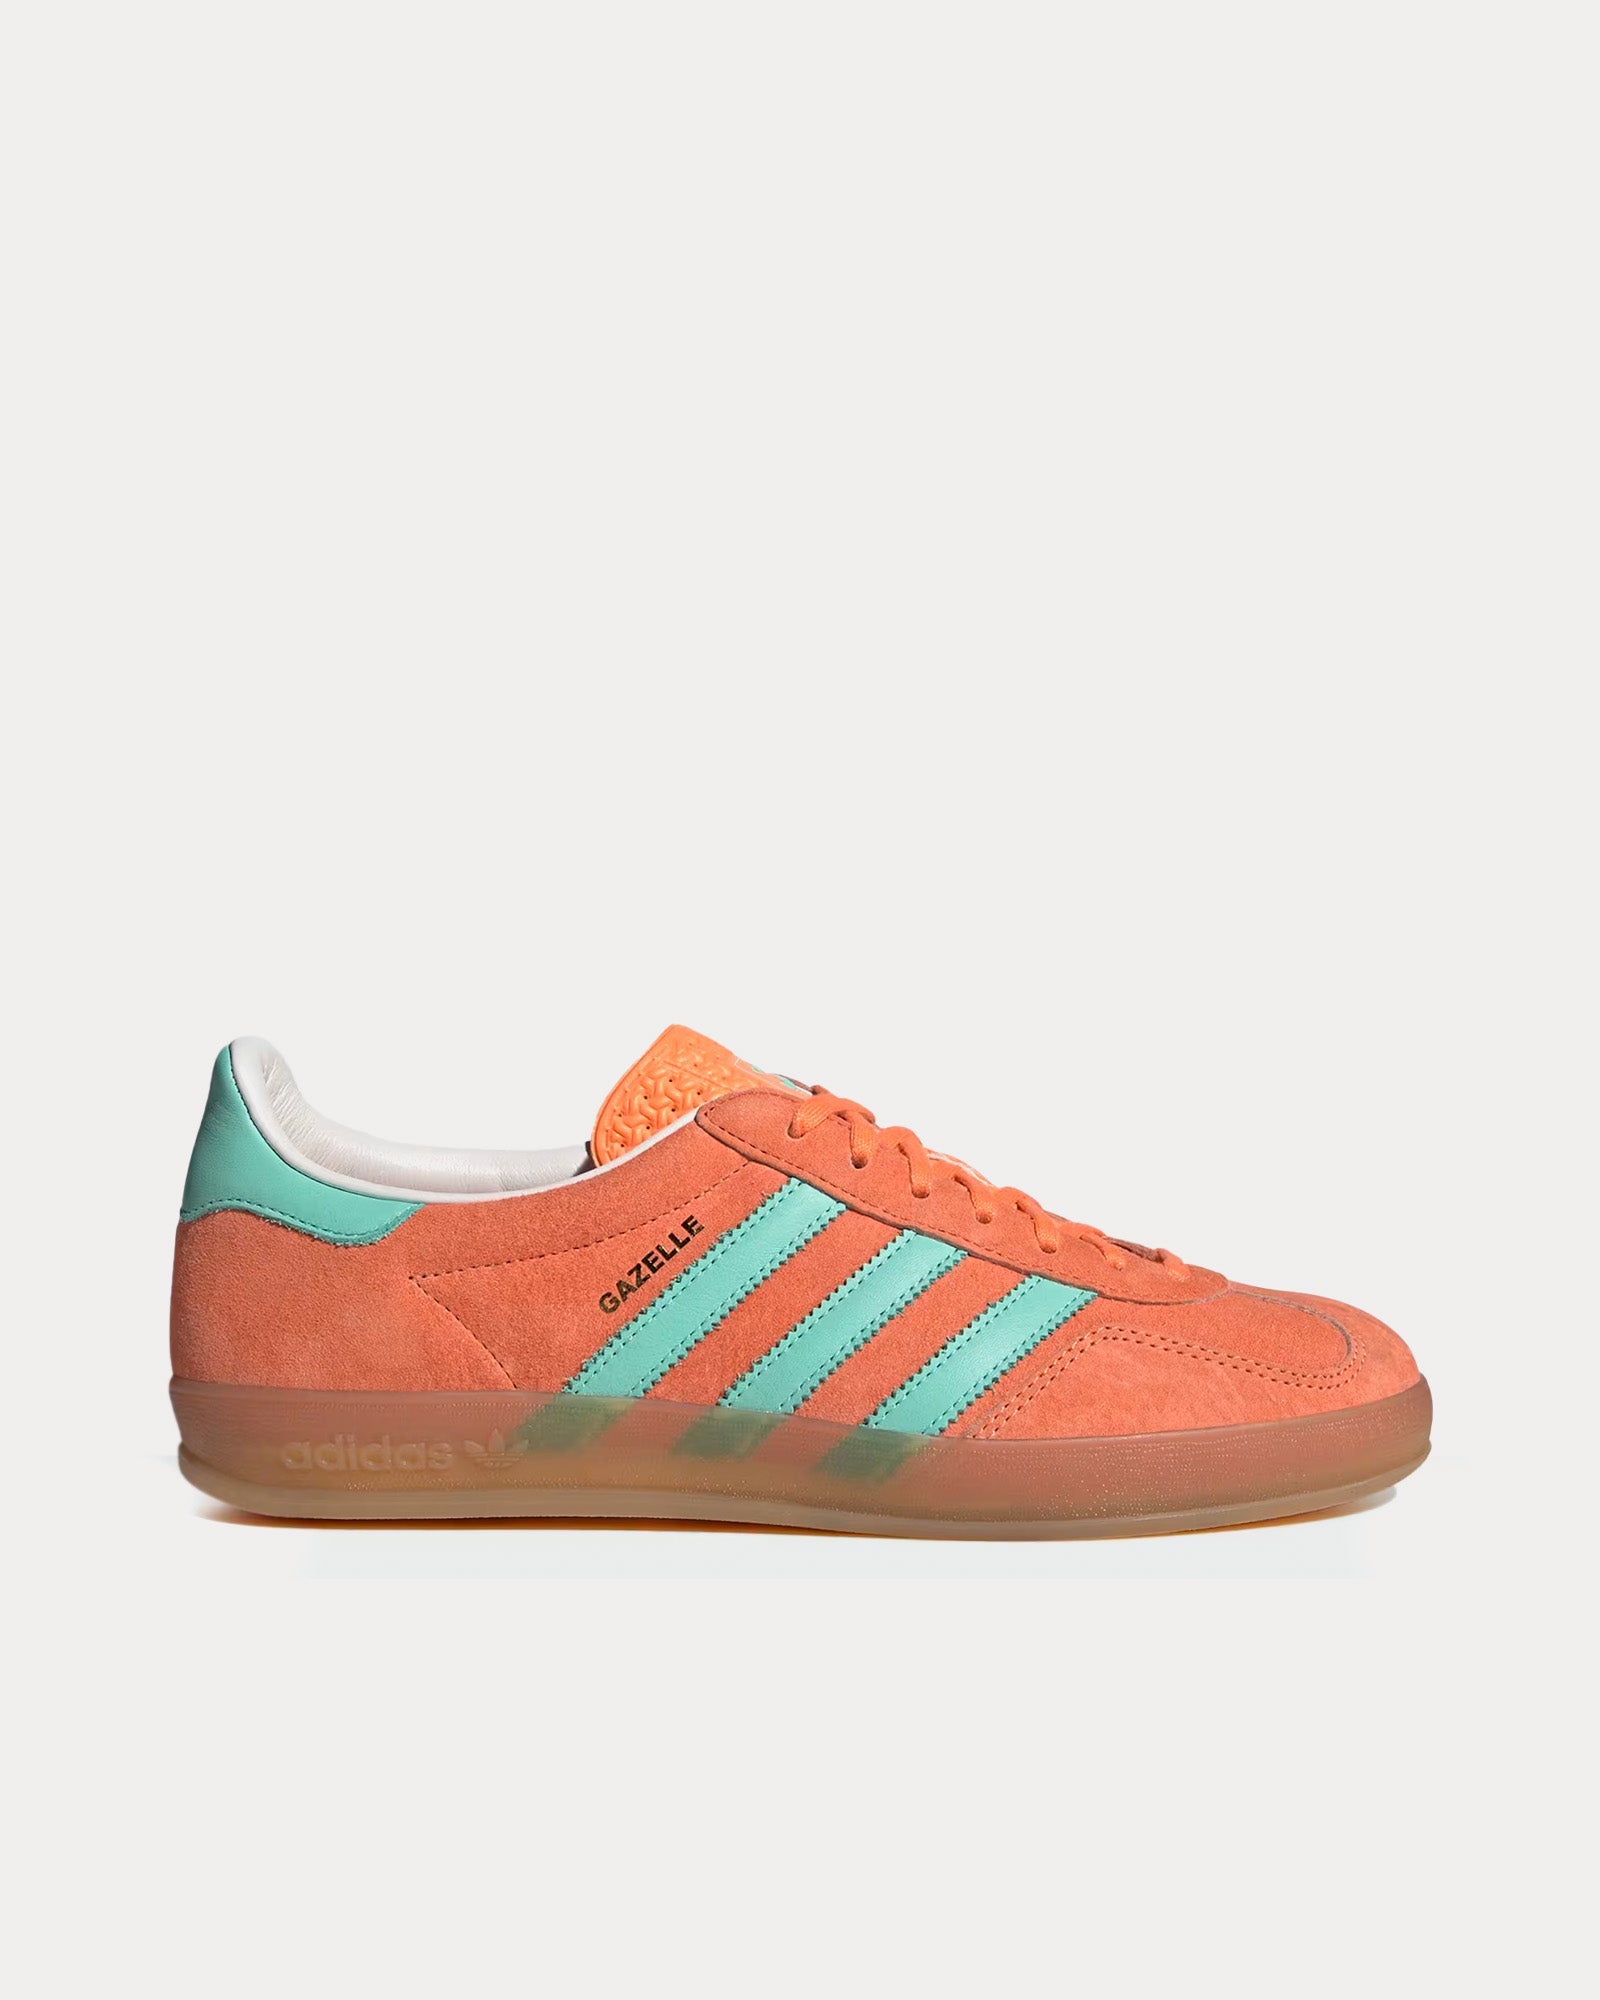 Adidas - Gazelle Indoors Easy Orange / Clear Mint / Gum Low Top Sneakers